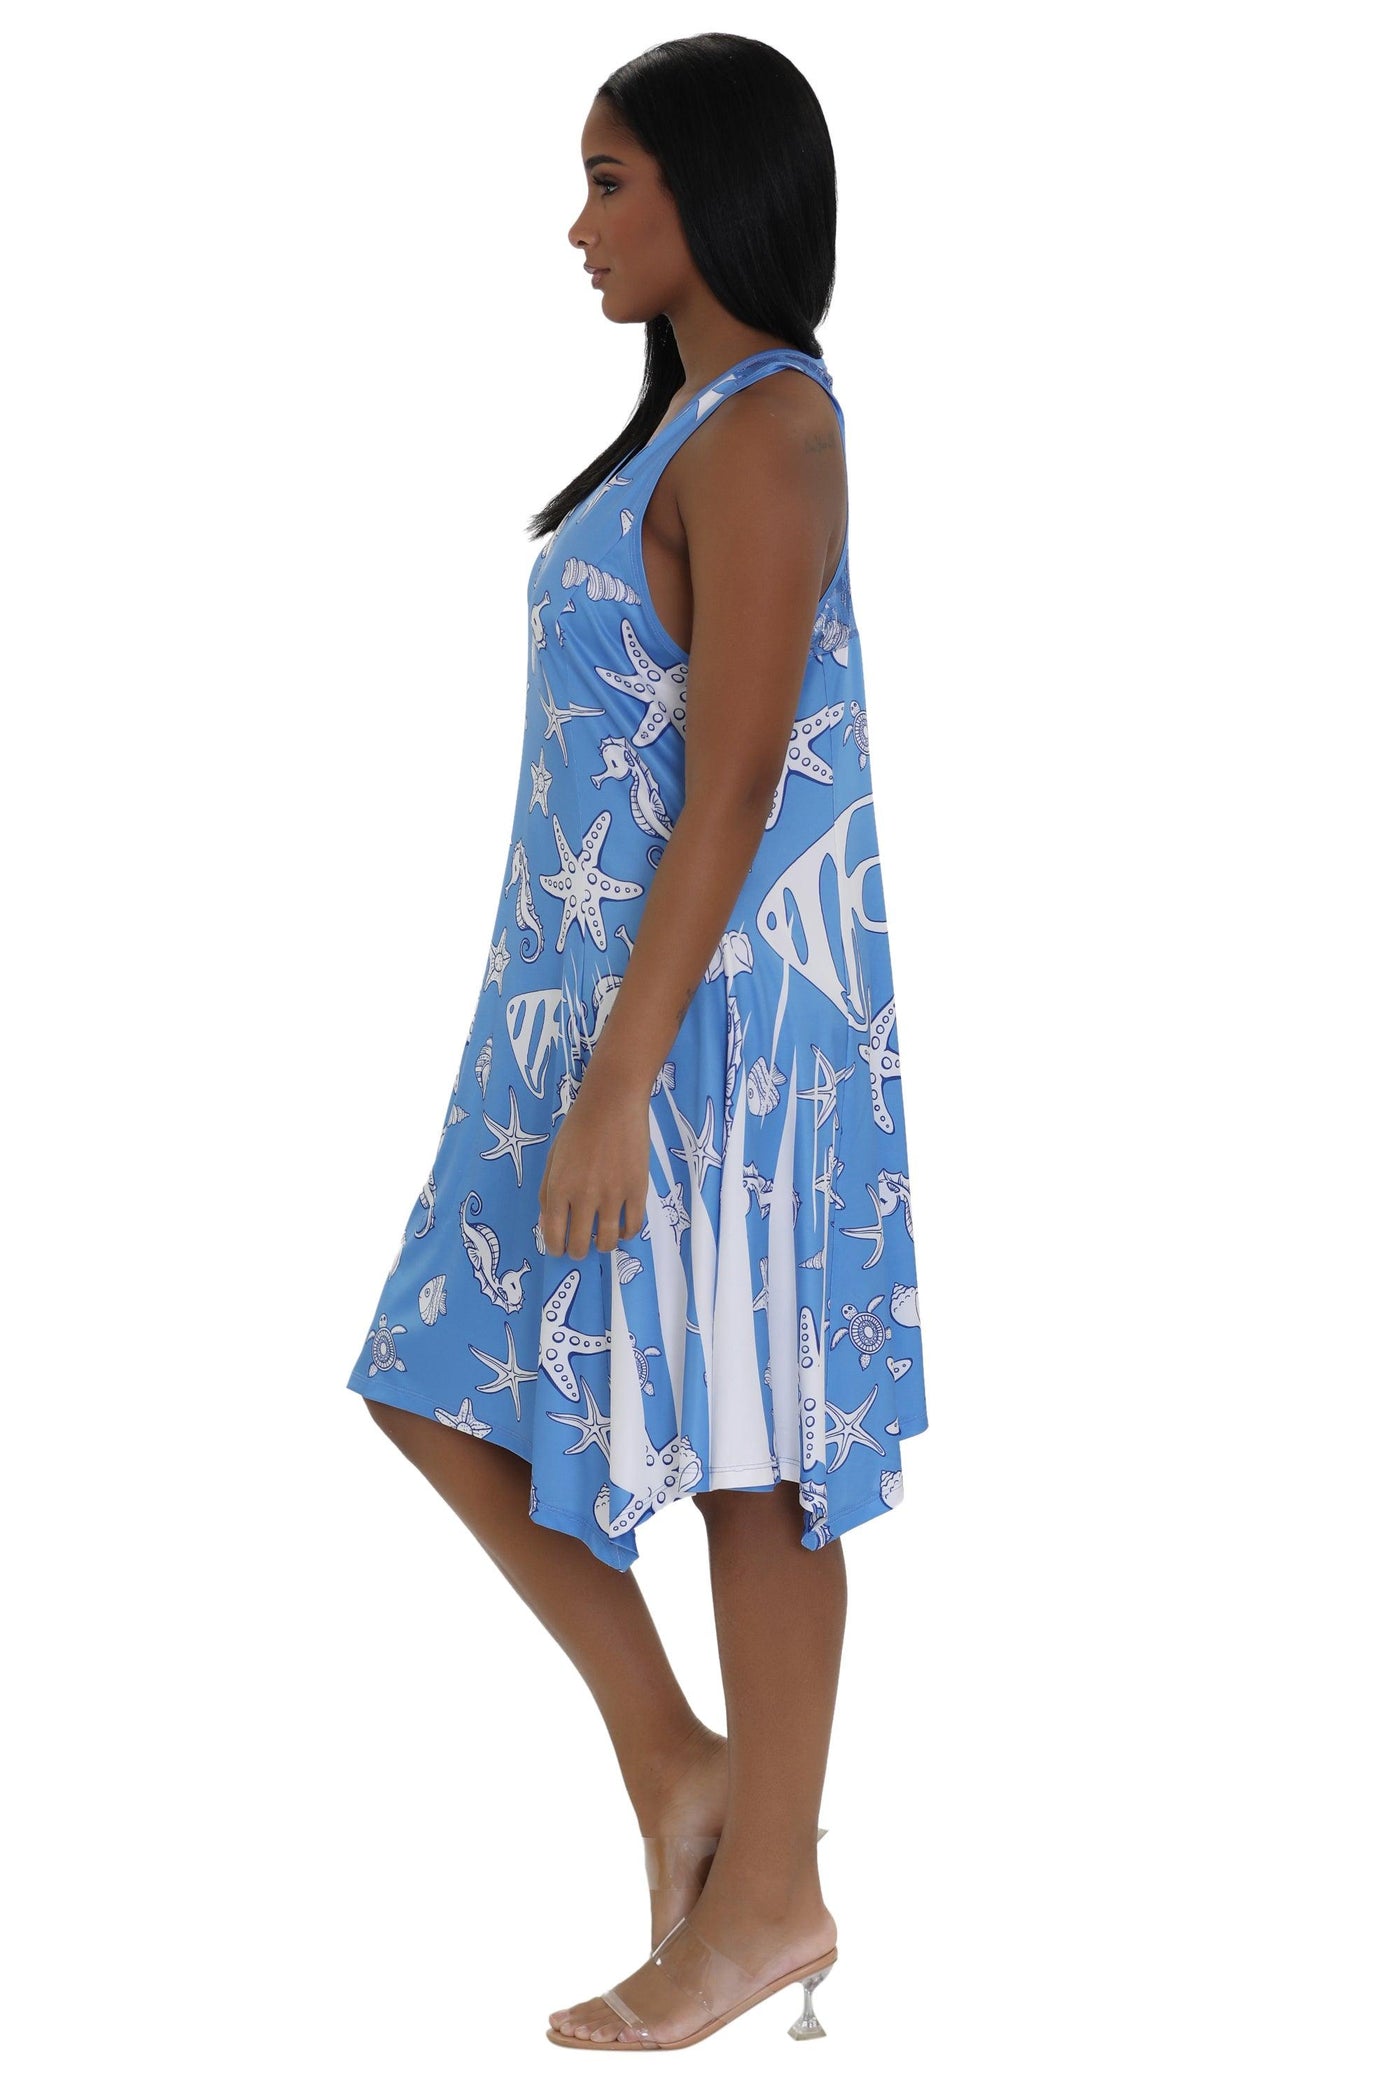 Nautical Print Beach Dress 21223  - Advance Apparels Inc